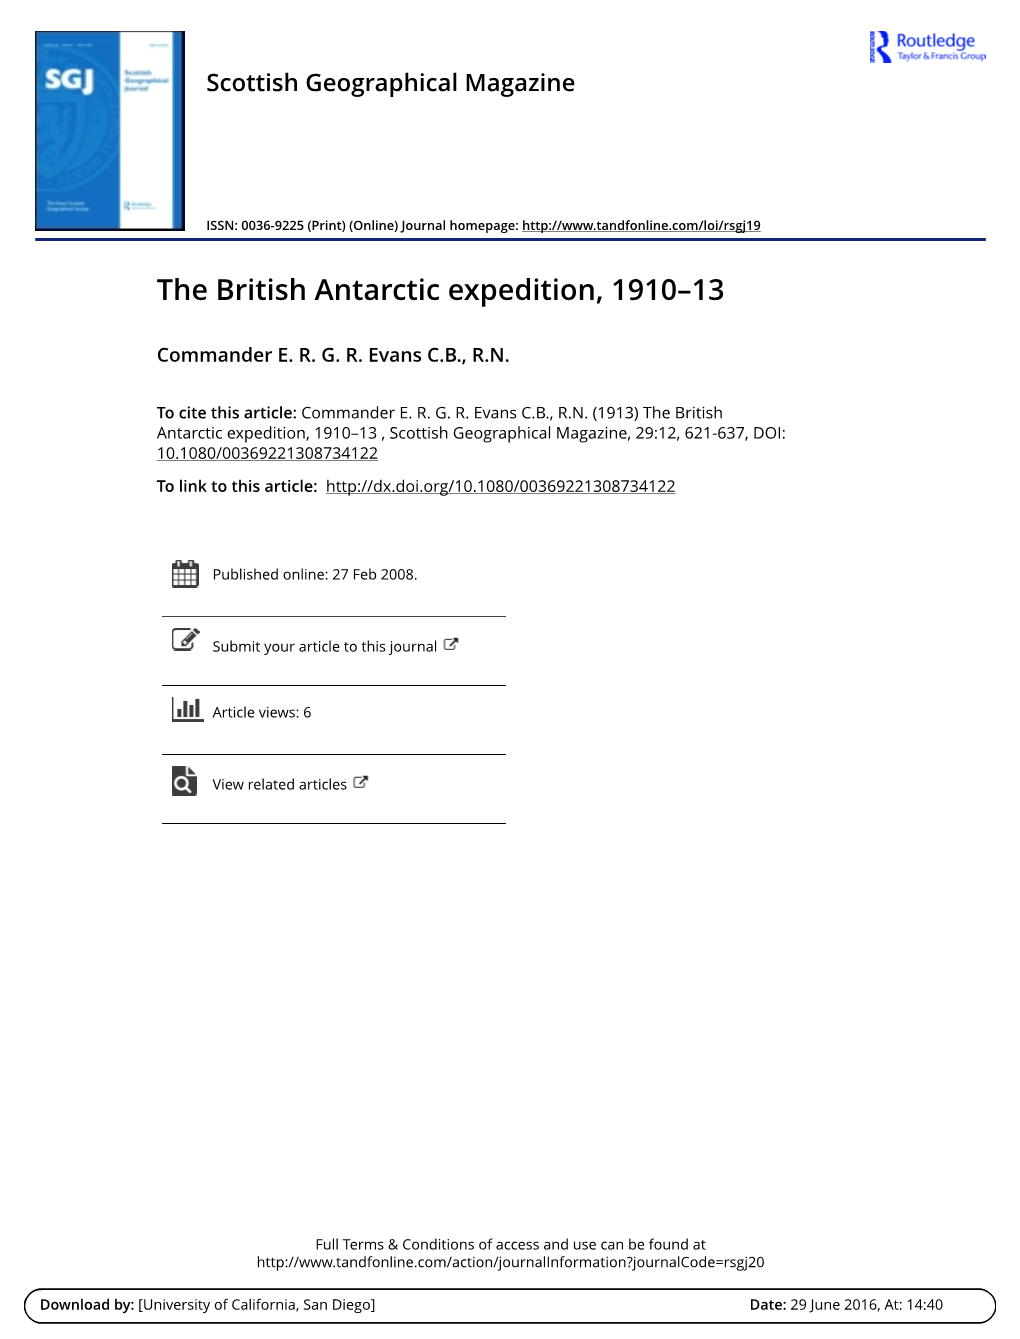 The British Antarctic Expedition, 1910–13